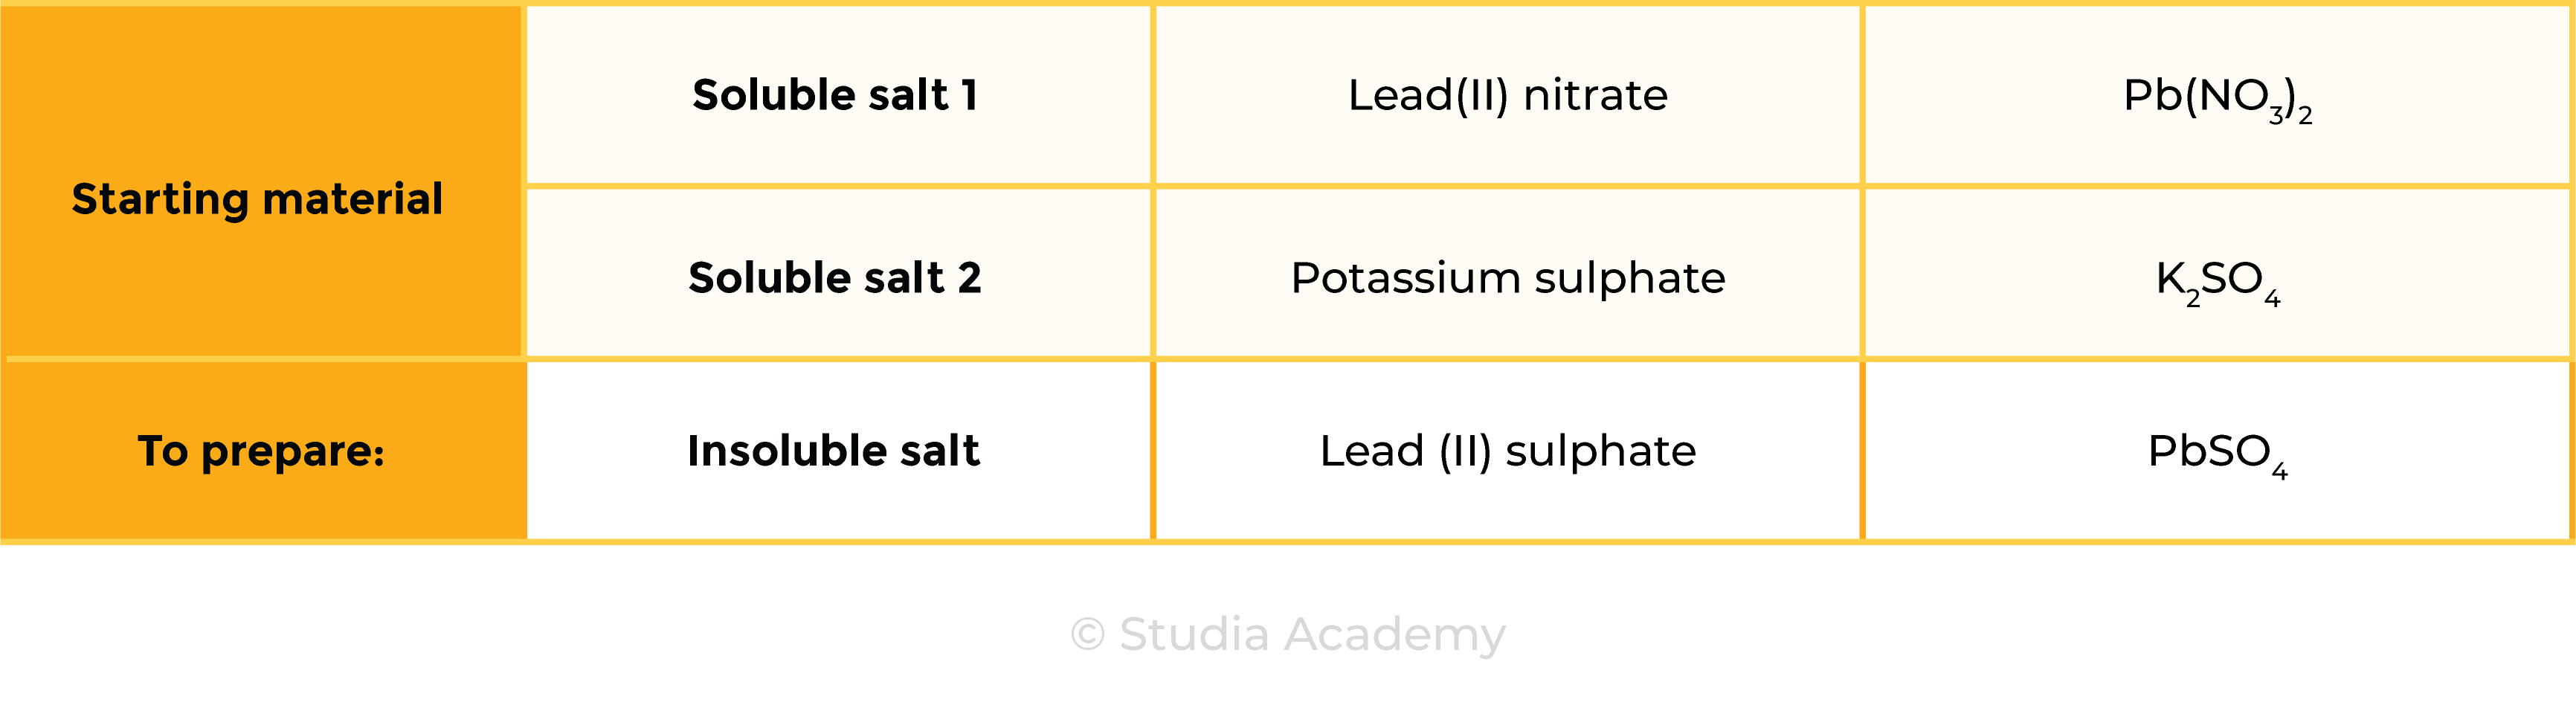 edexcel_igcse_chemistry_topic 16 tables_acids, bases, and salt preparations_005_reactants to prepare lead sulfate